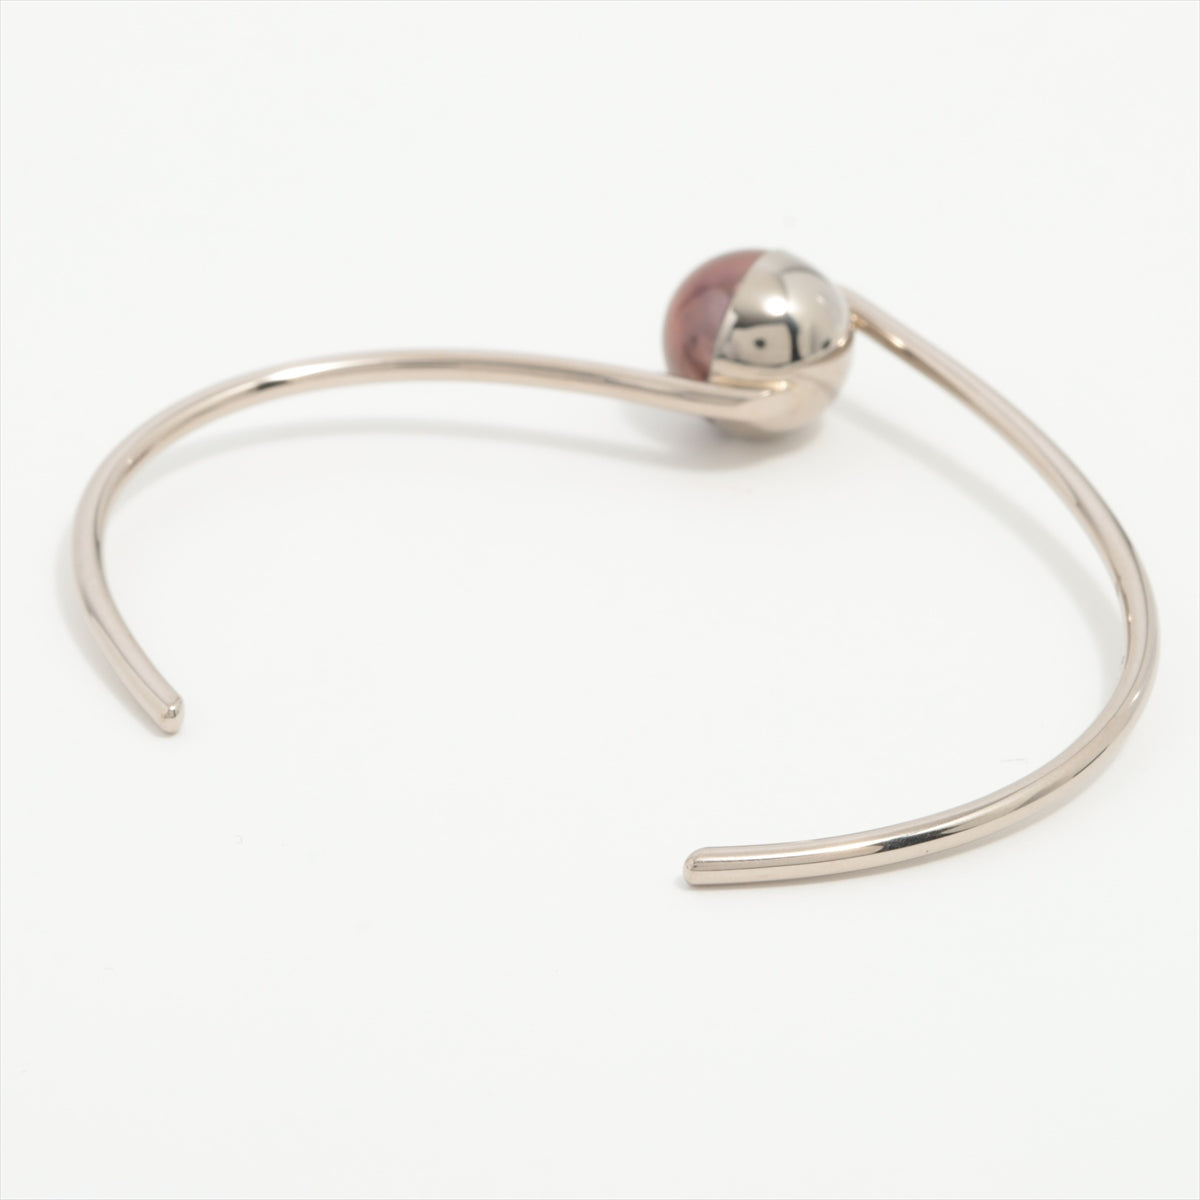 TASAKI M/G Arlequin Pearl Bracelet 750(WG) 8.7g Hallmark is hazy Pearl small scratches